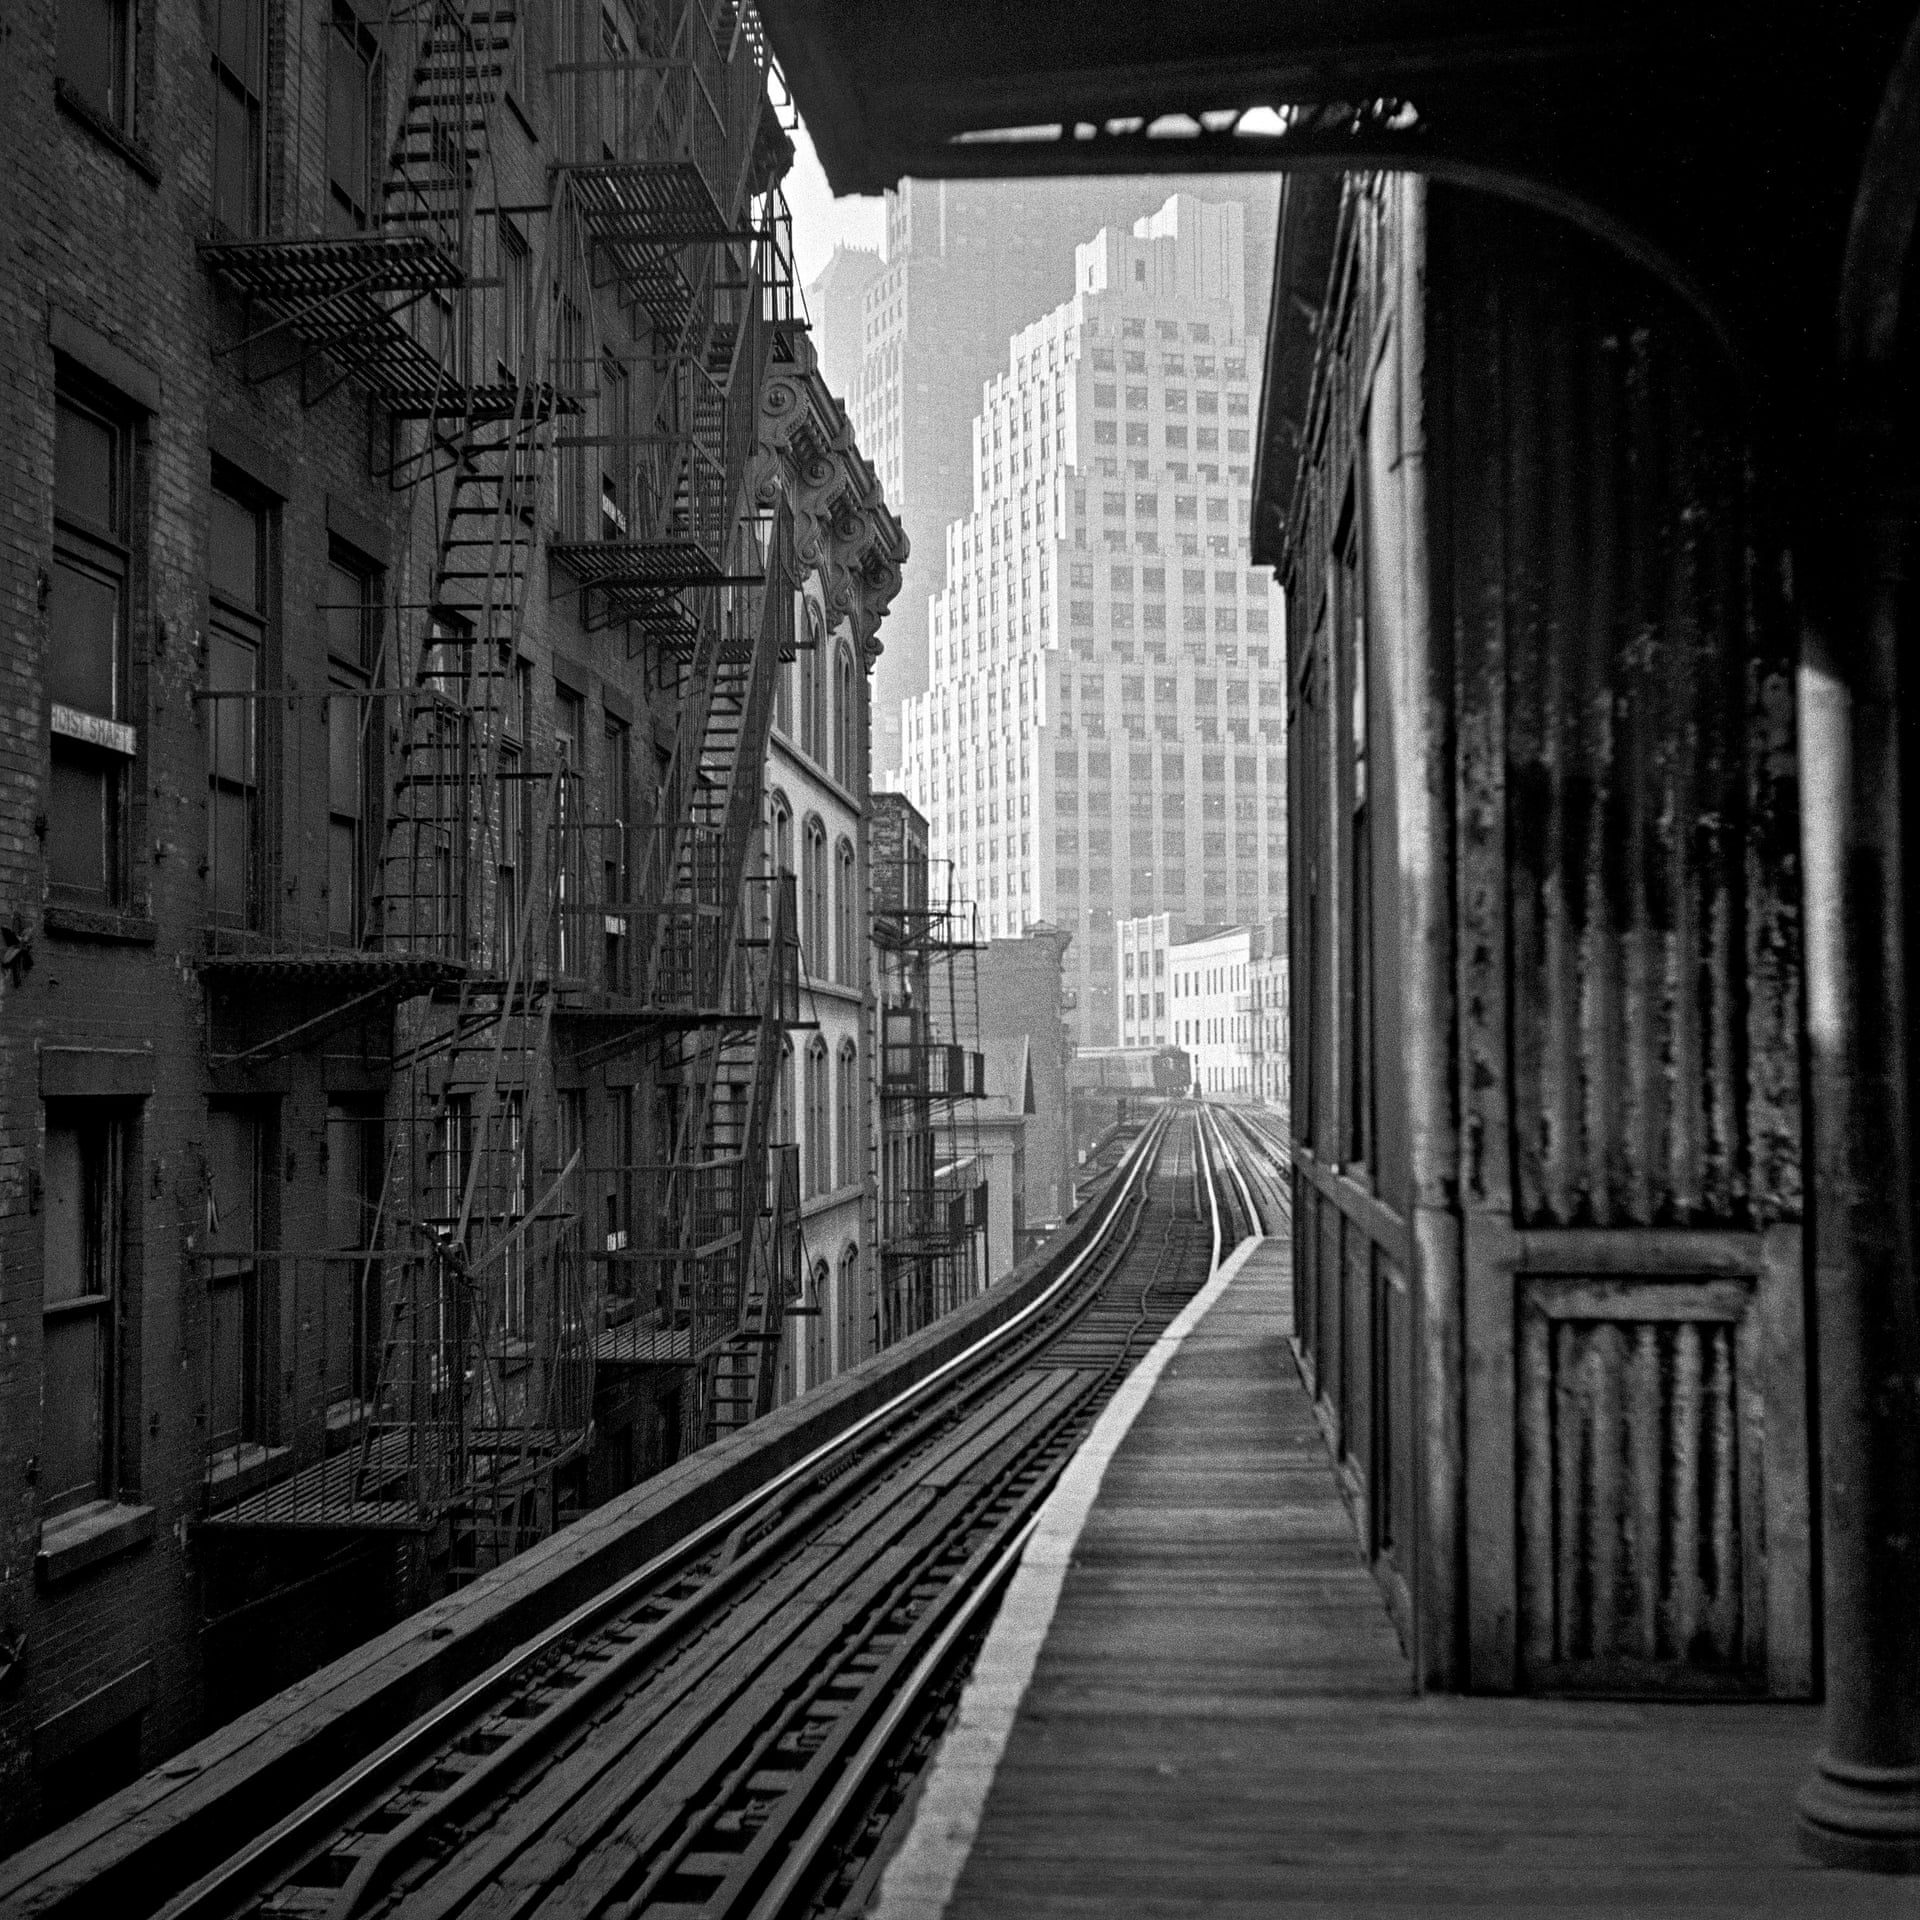 L train station, New York, 1964